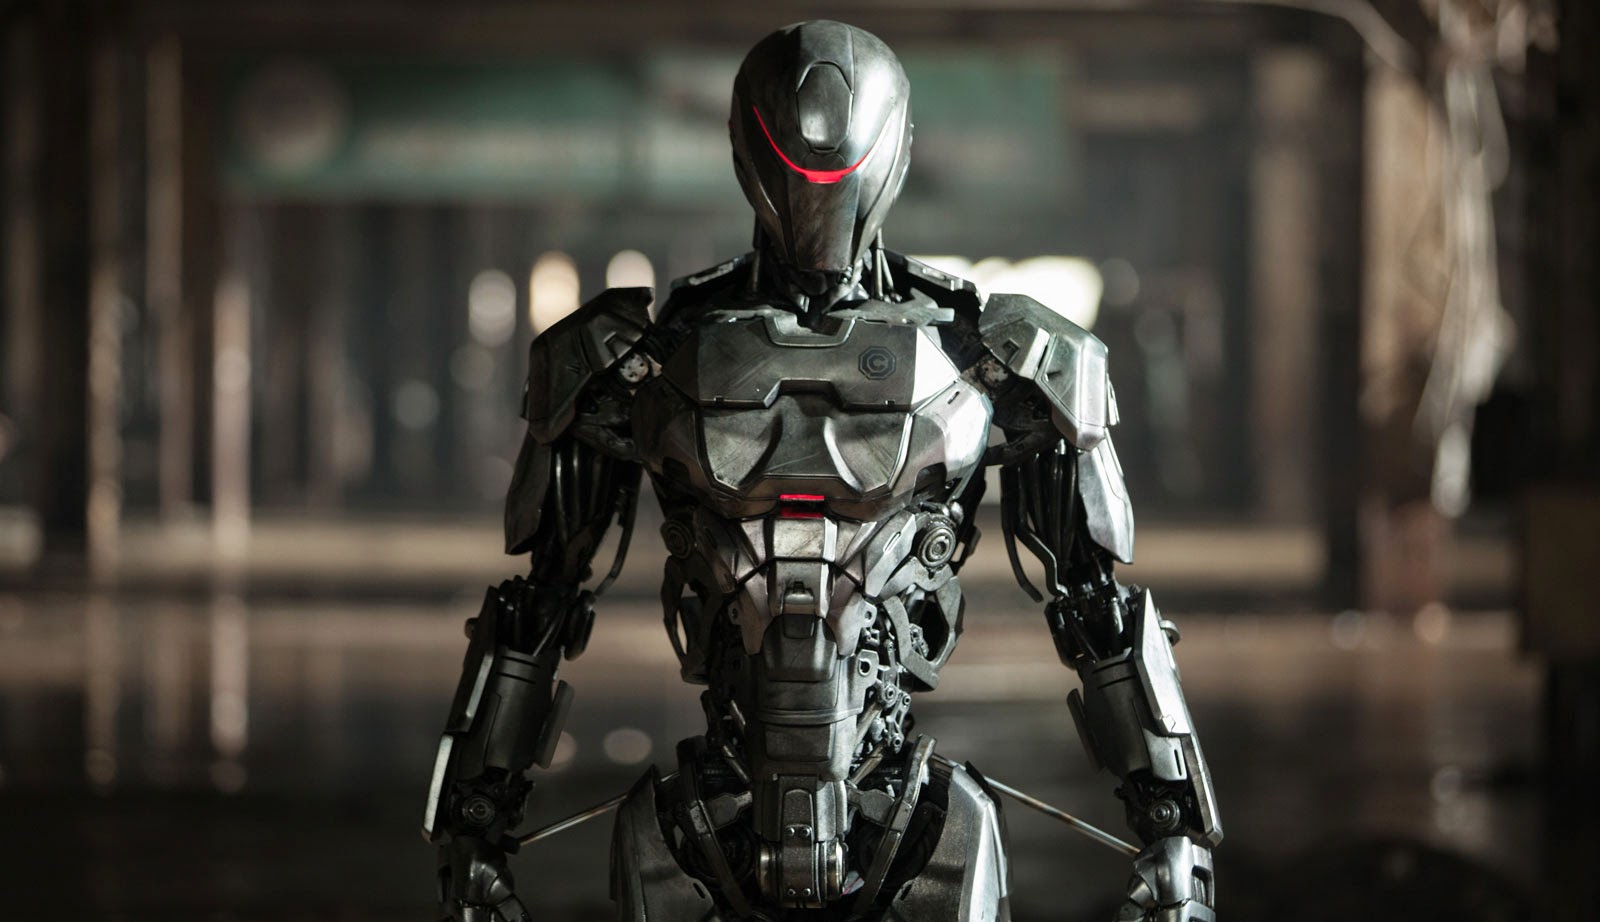 Machine Robot Sci Fi Robocop 2014 1600x922